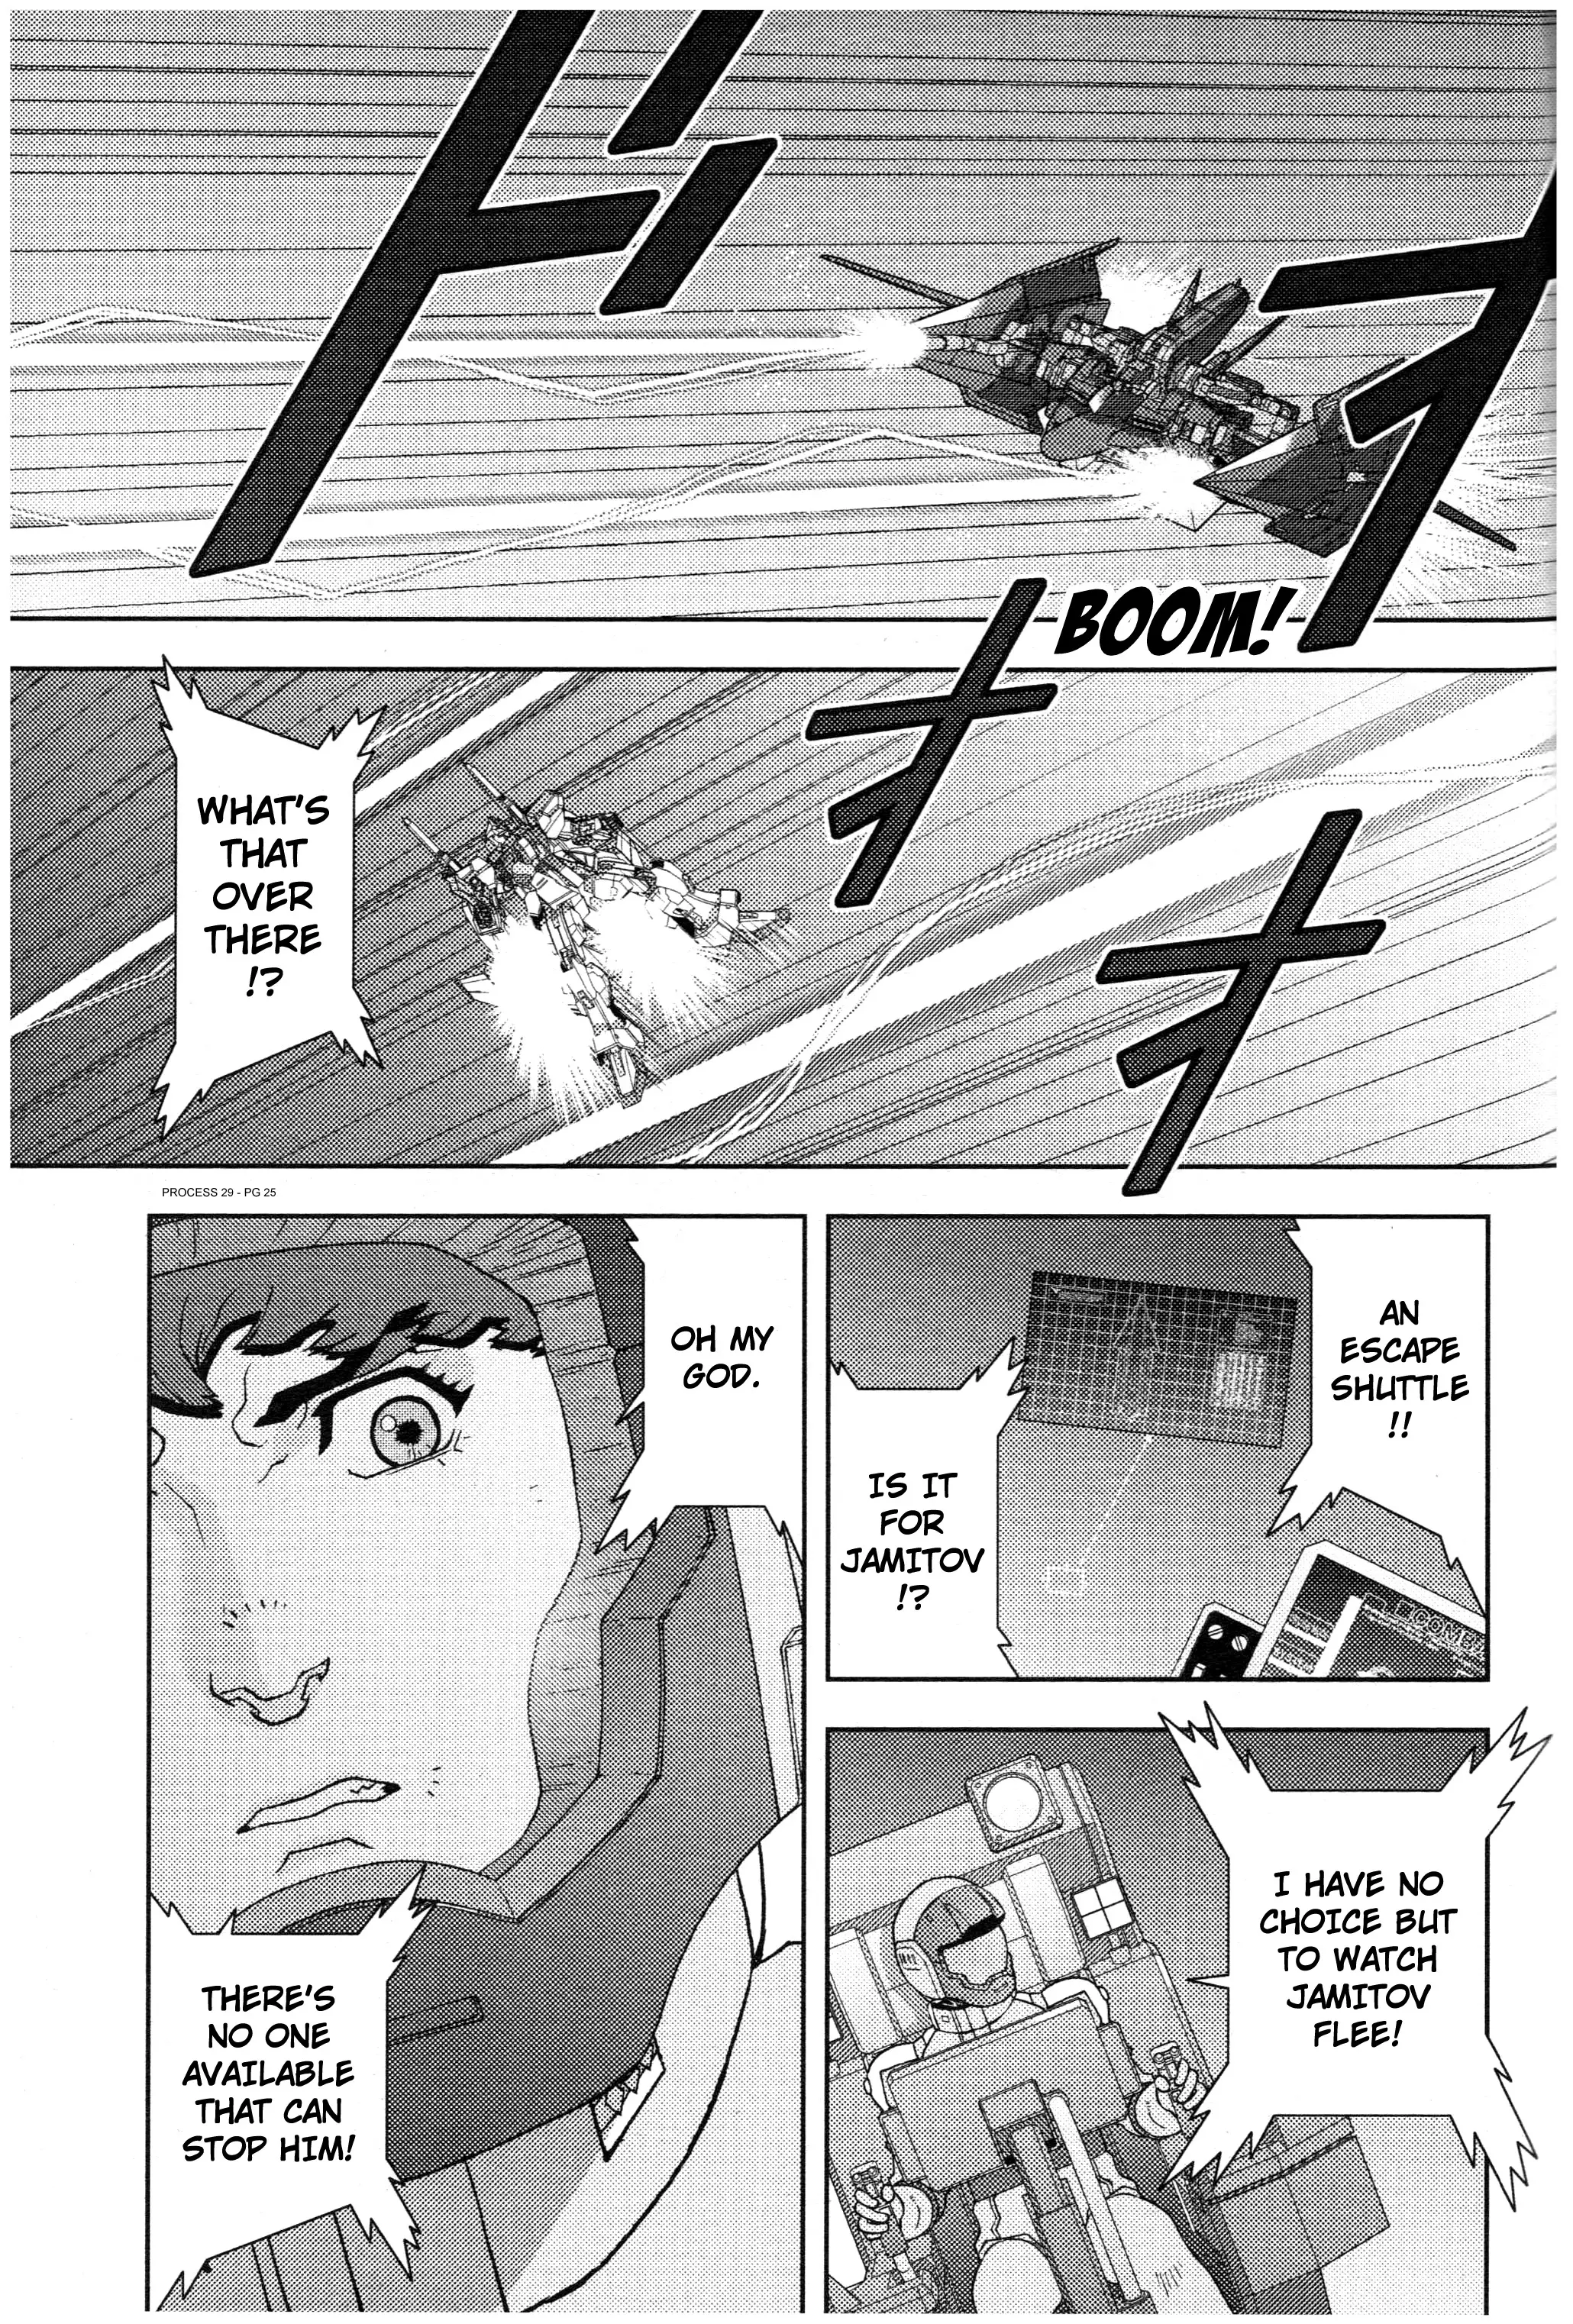 Mobile Suit Zeta Gundam - Define - 78 page 25-79f5e305